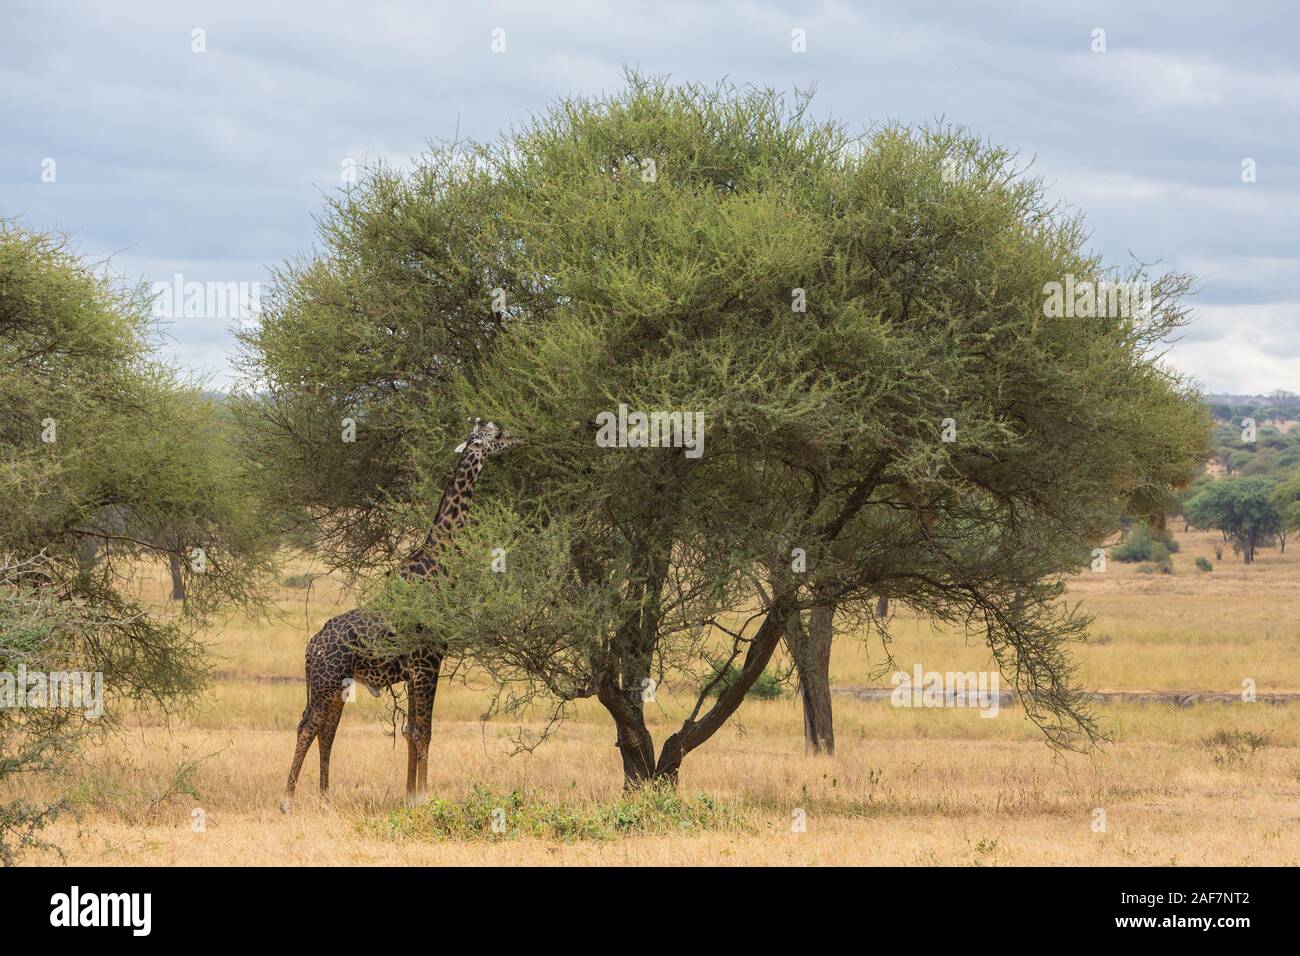 Tanzania. Tarangire National Park. Maasai Giraffe (Giraffa camelopardalis tippelskirchi) Eating an Acacia Tree. Stock Photo